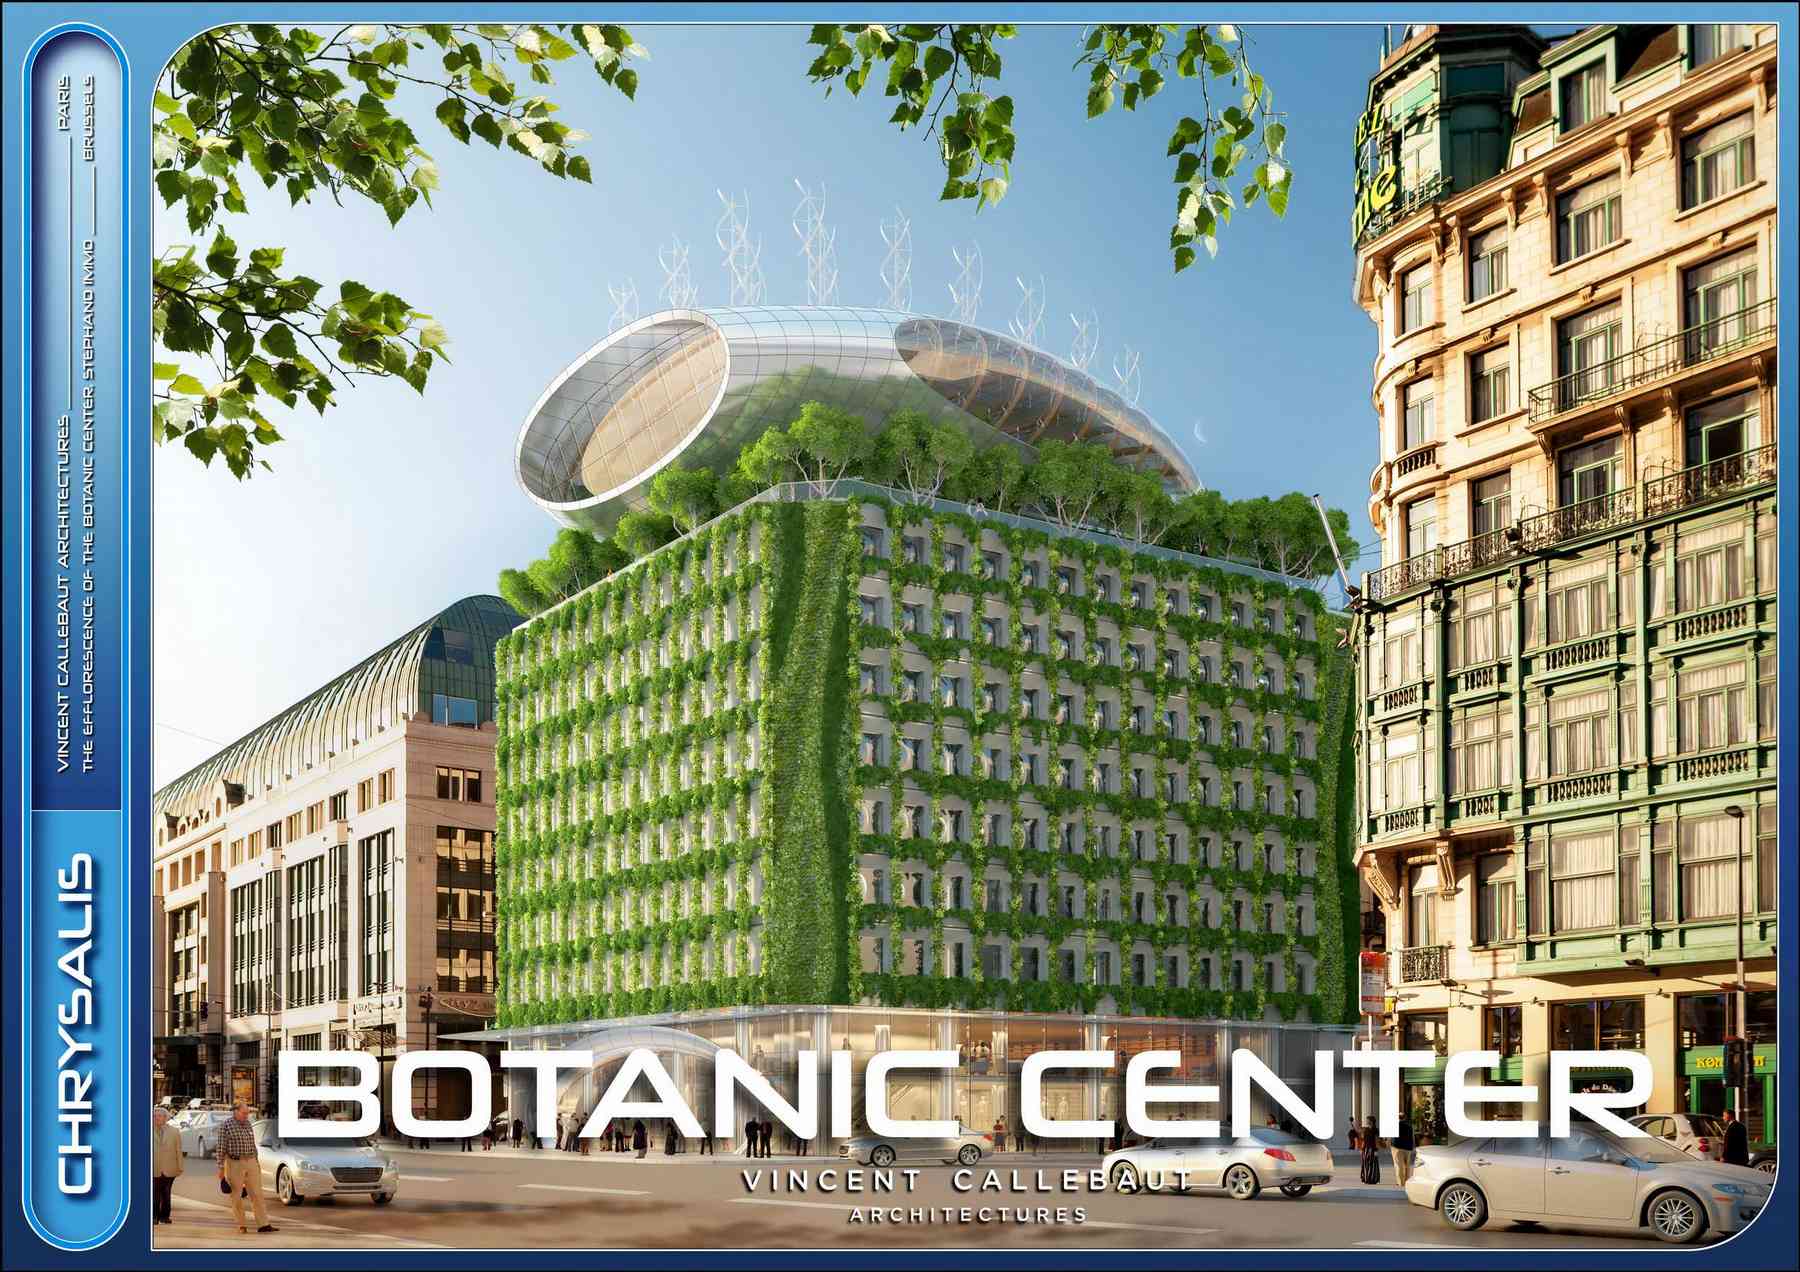 160929_botaniccenter-botaniccenter_pl001